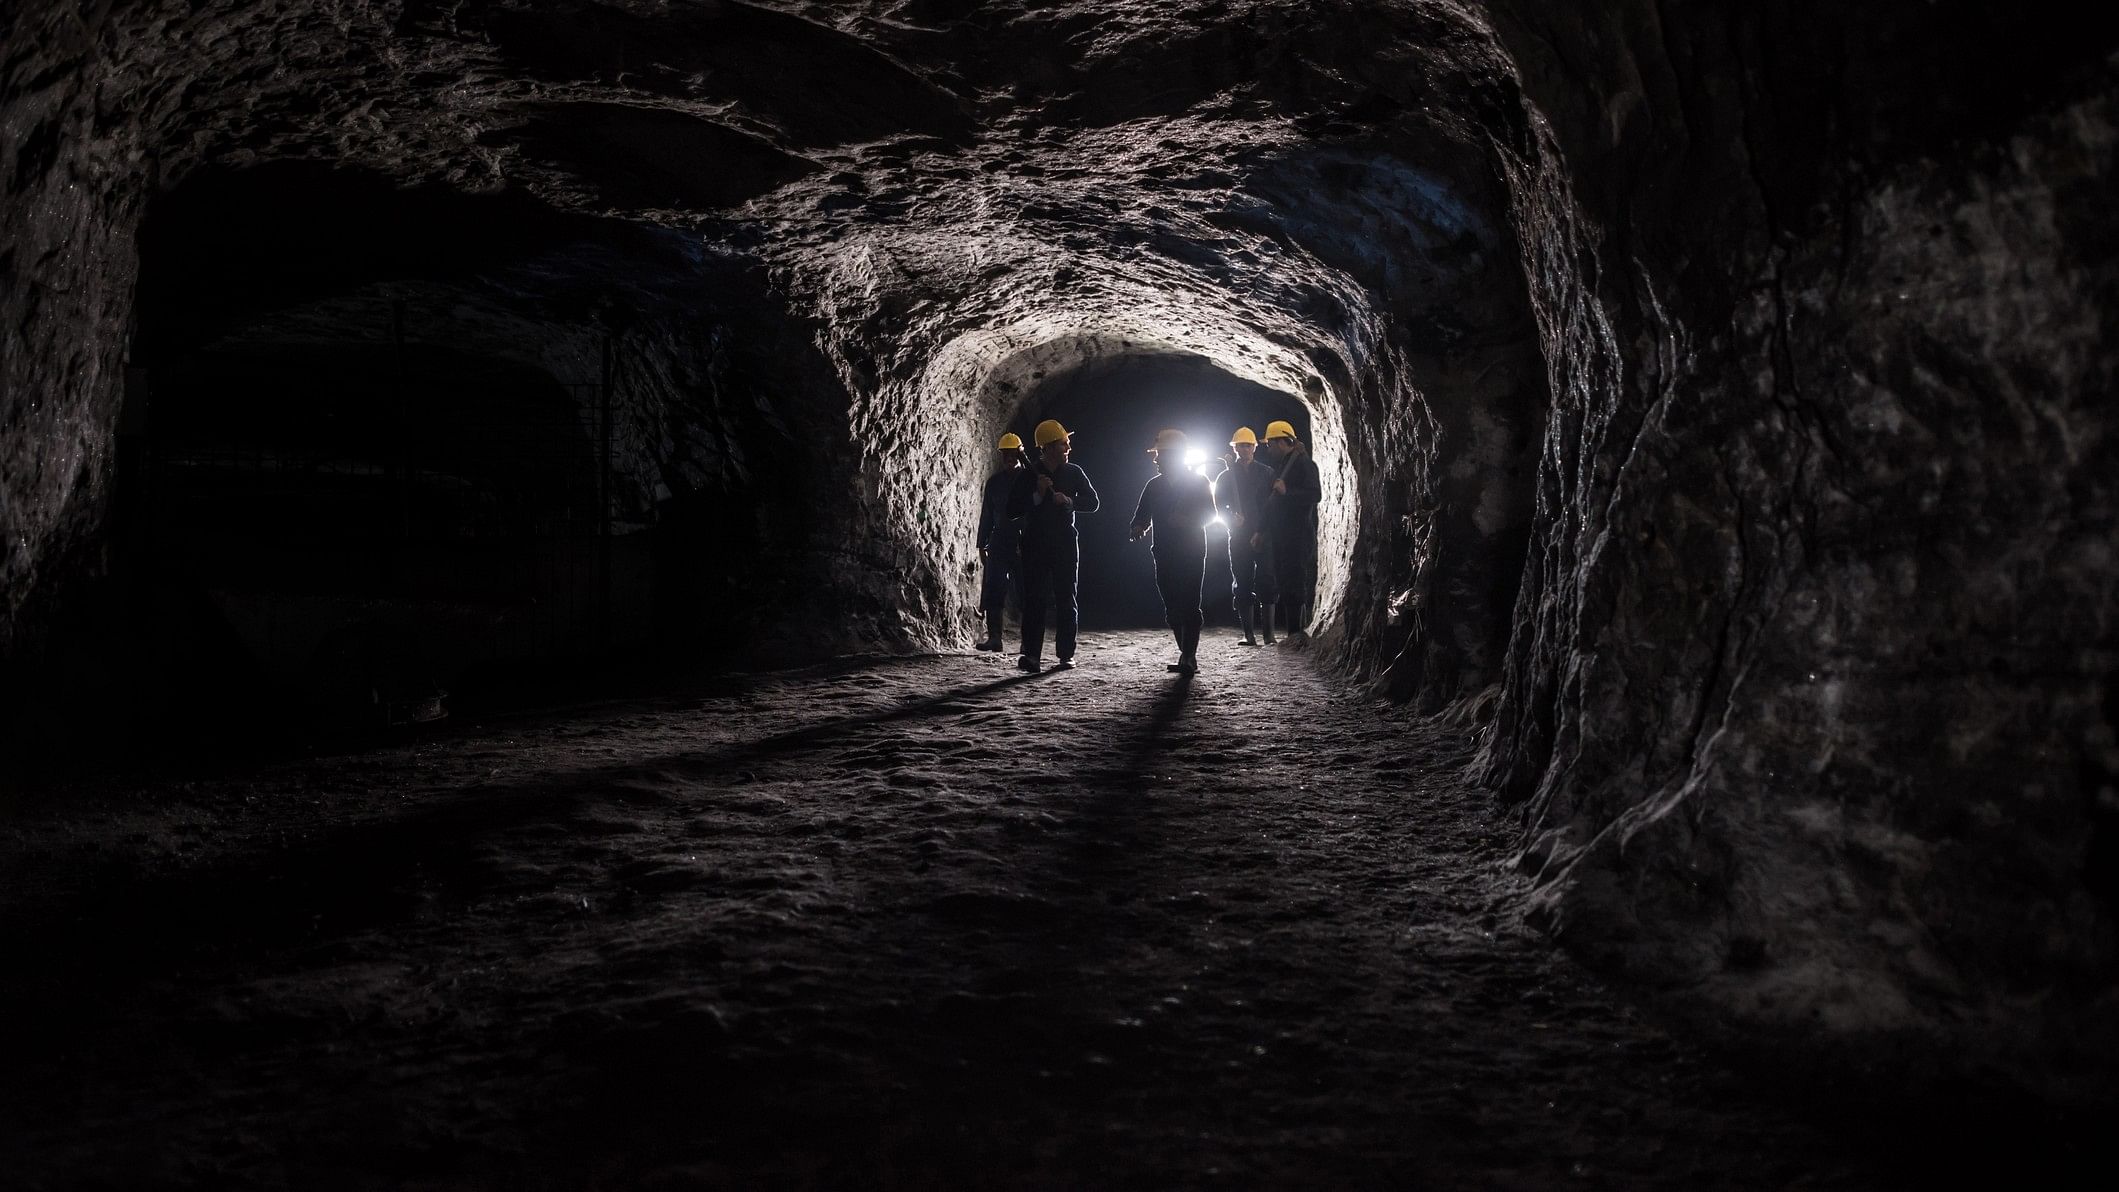 <div class="paragraphs"><p>Representative image showing group of men in a dark mine underground.</p></div>